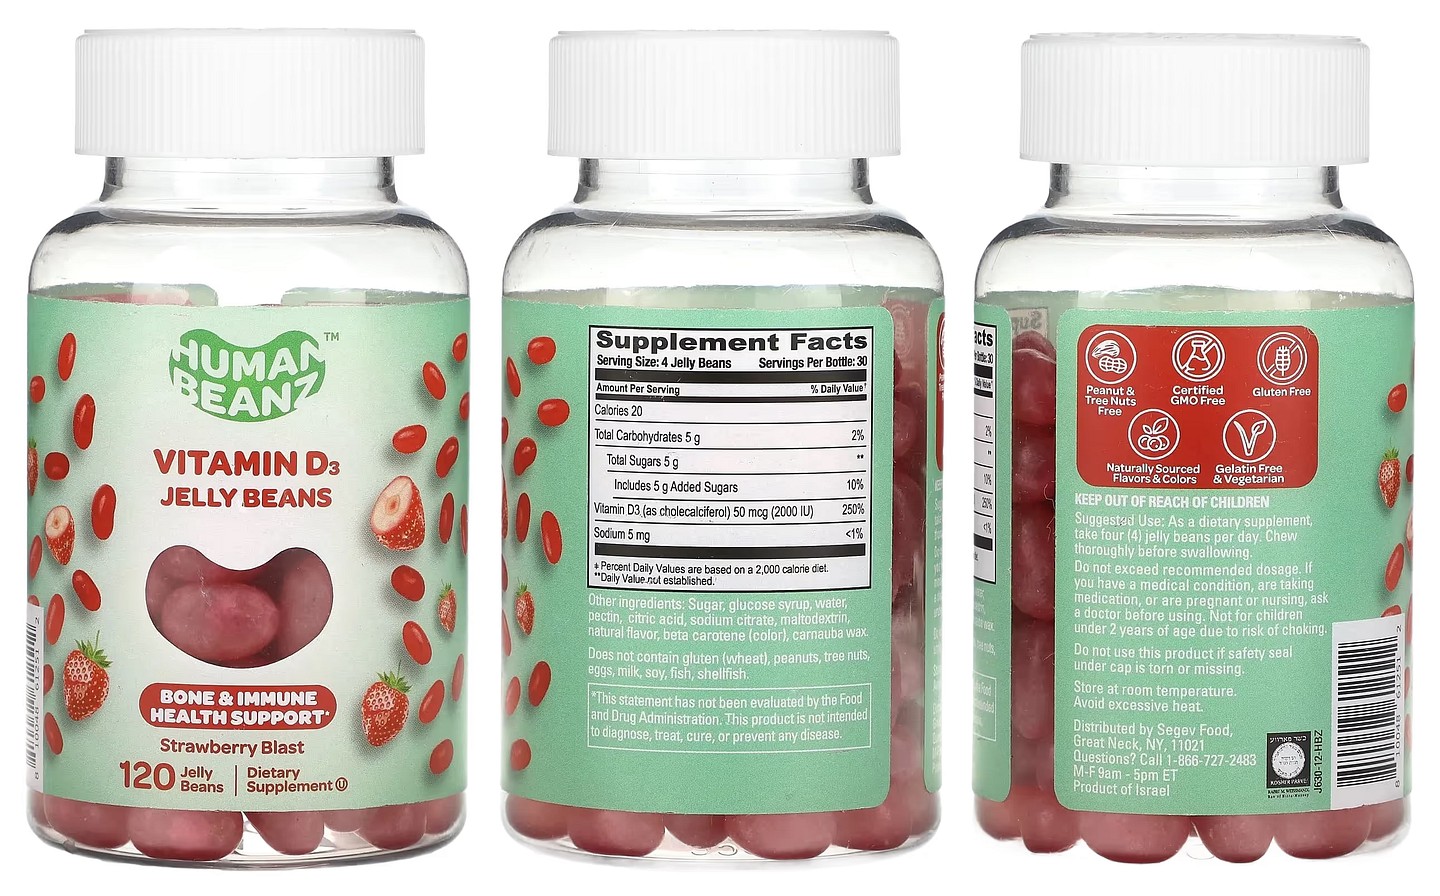 Human Beanz, Vitamin D3 Jelly Beans, Strawberry Blast packaging